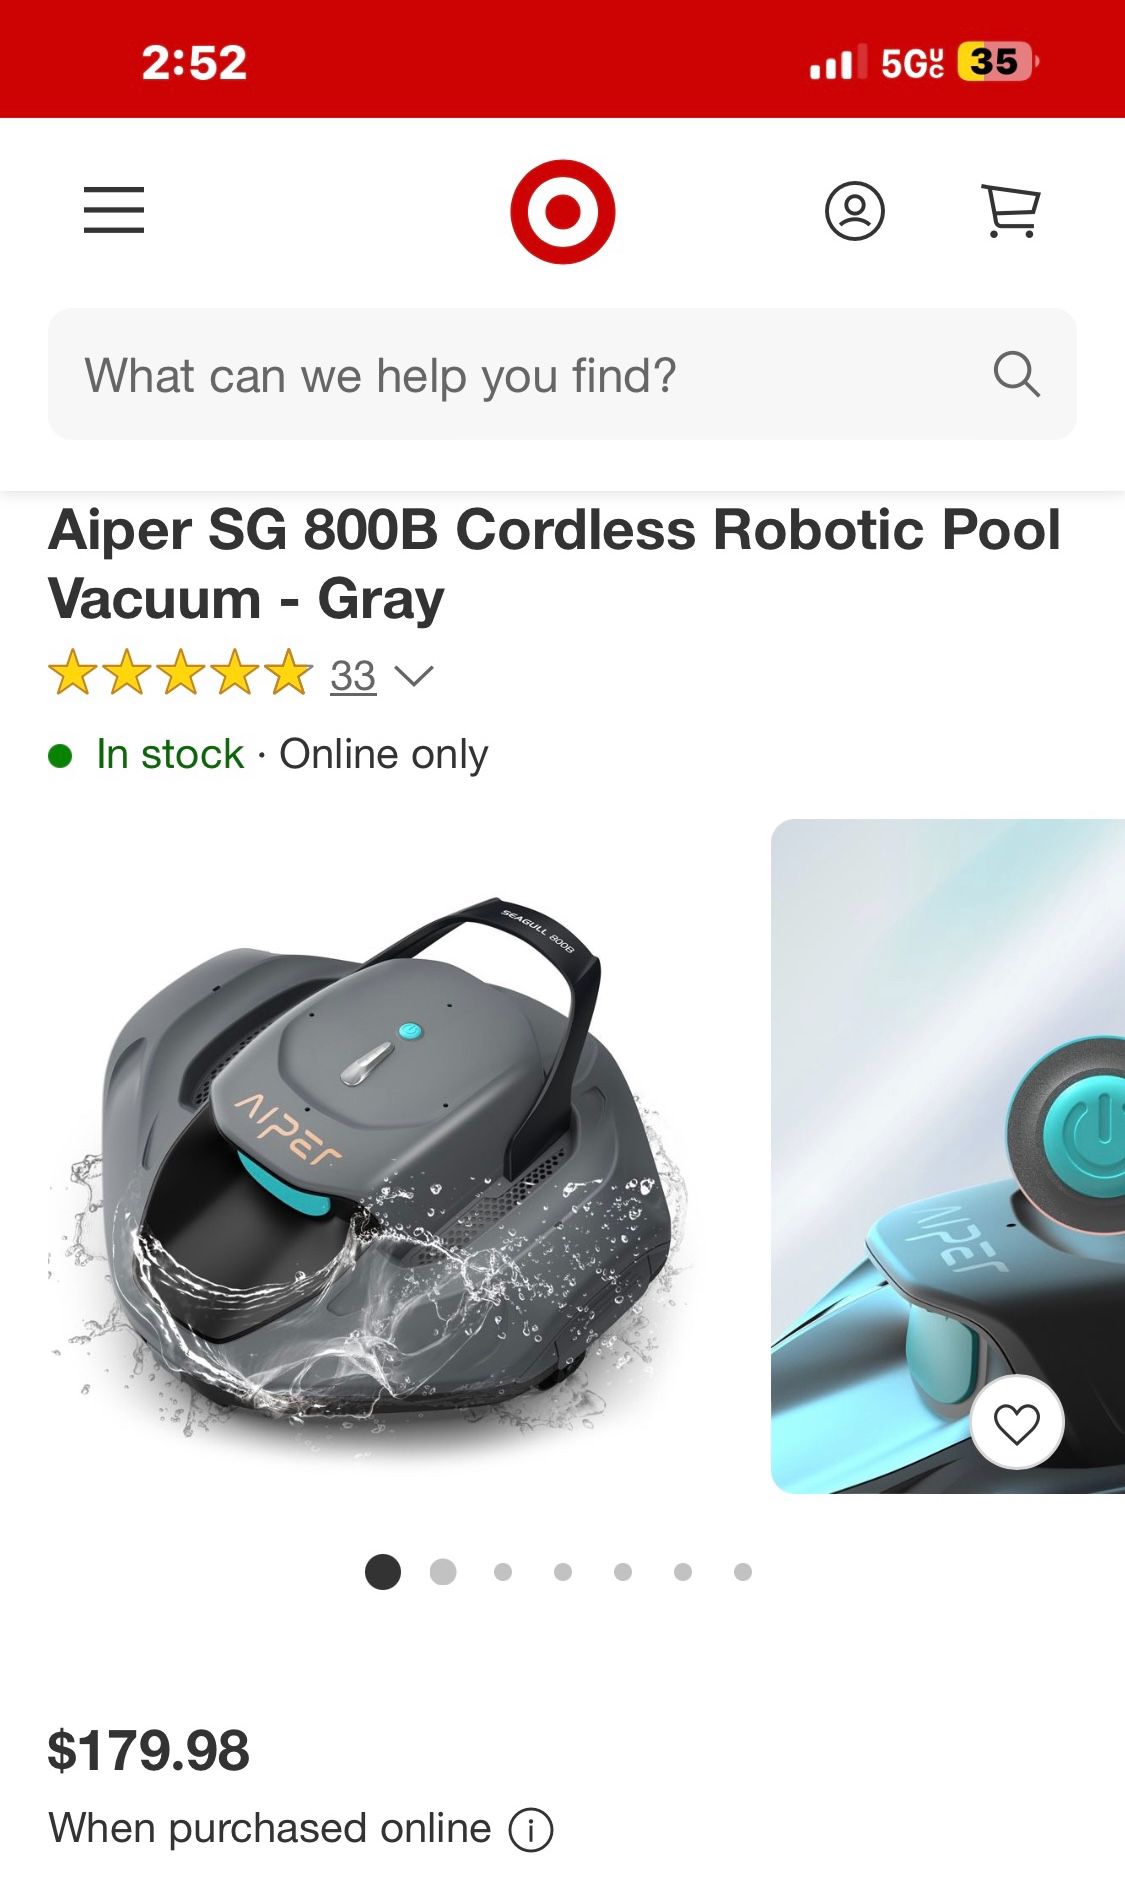 Cordless Robotic Pool Vacuum Aiper SG 800B